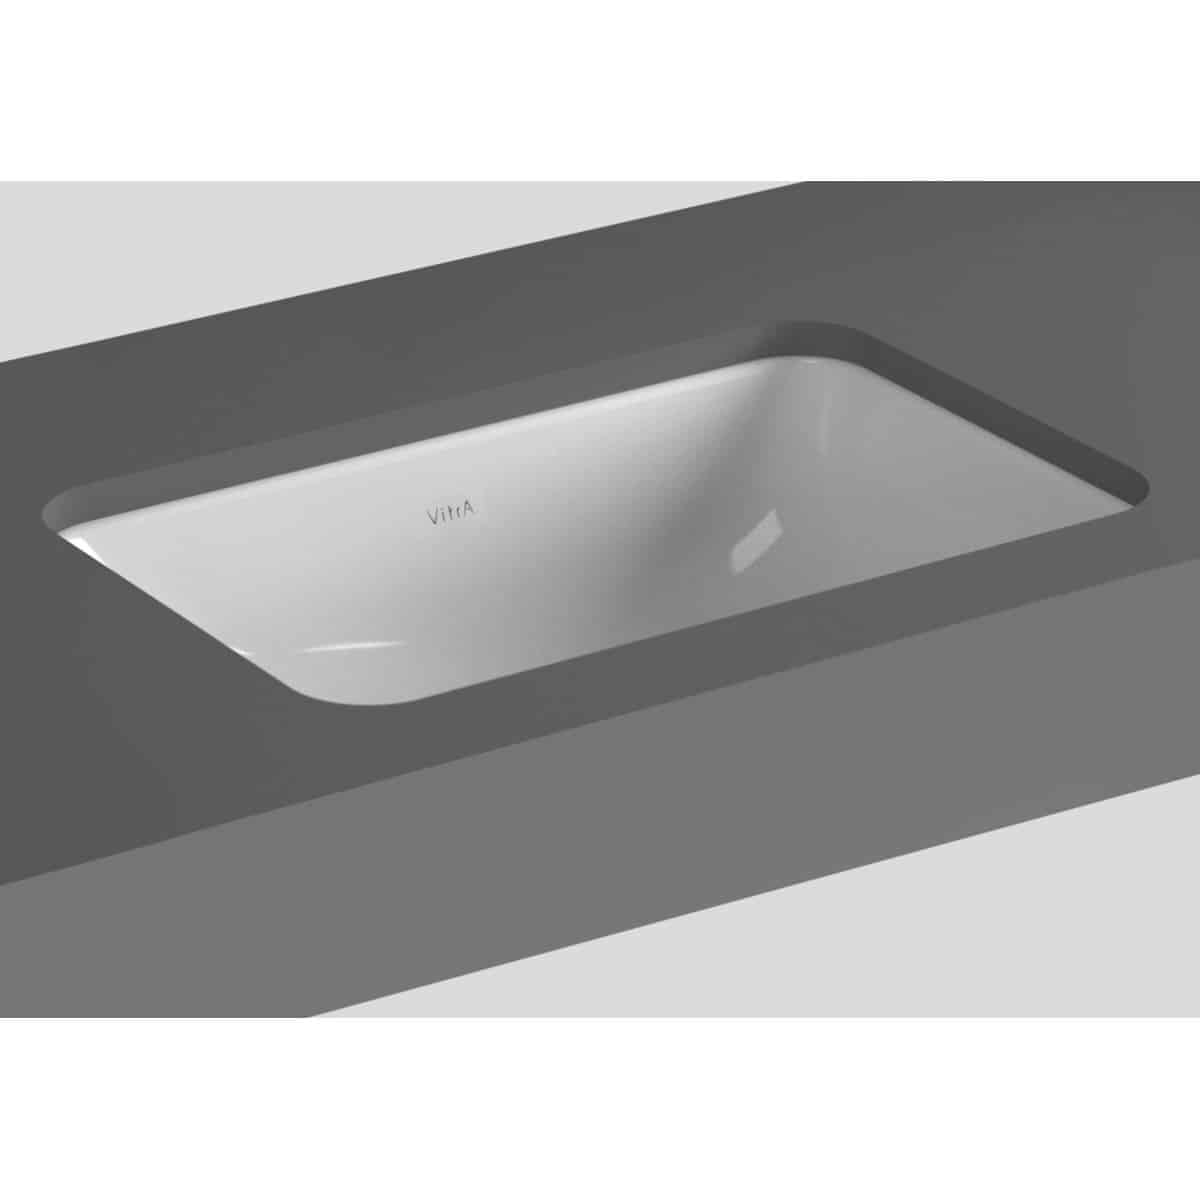 Vitra S20 Rectangle Ceramic Undercounter Sink